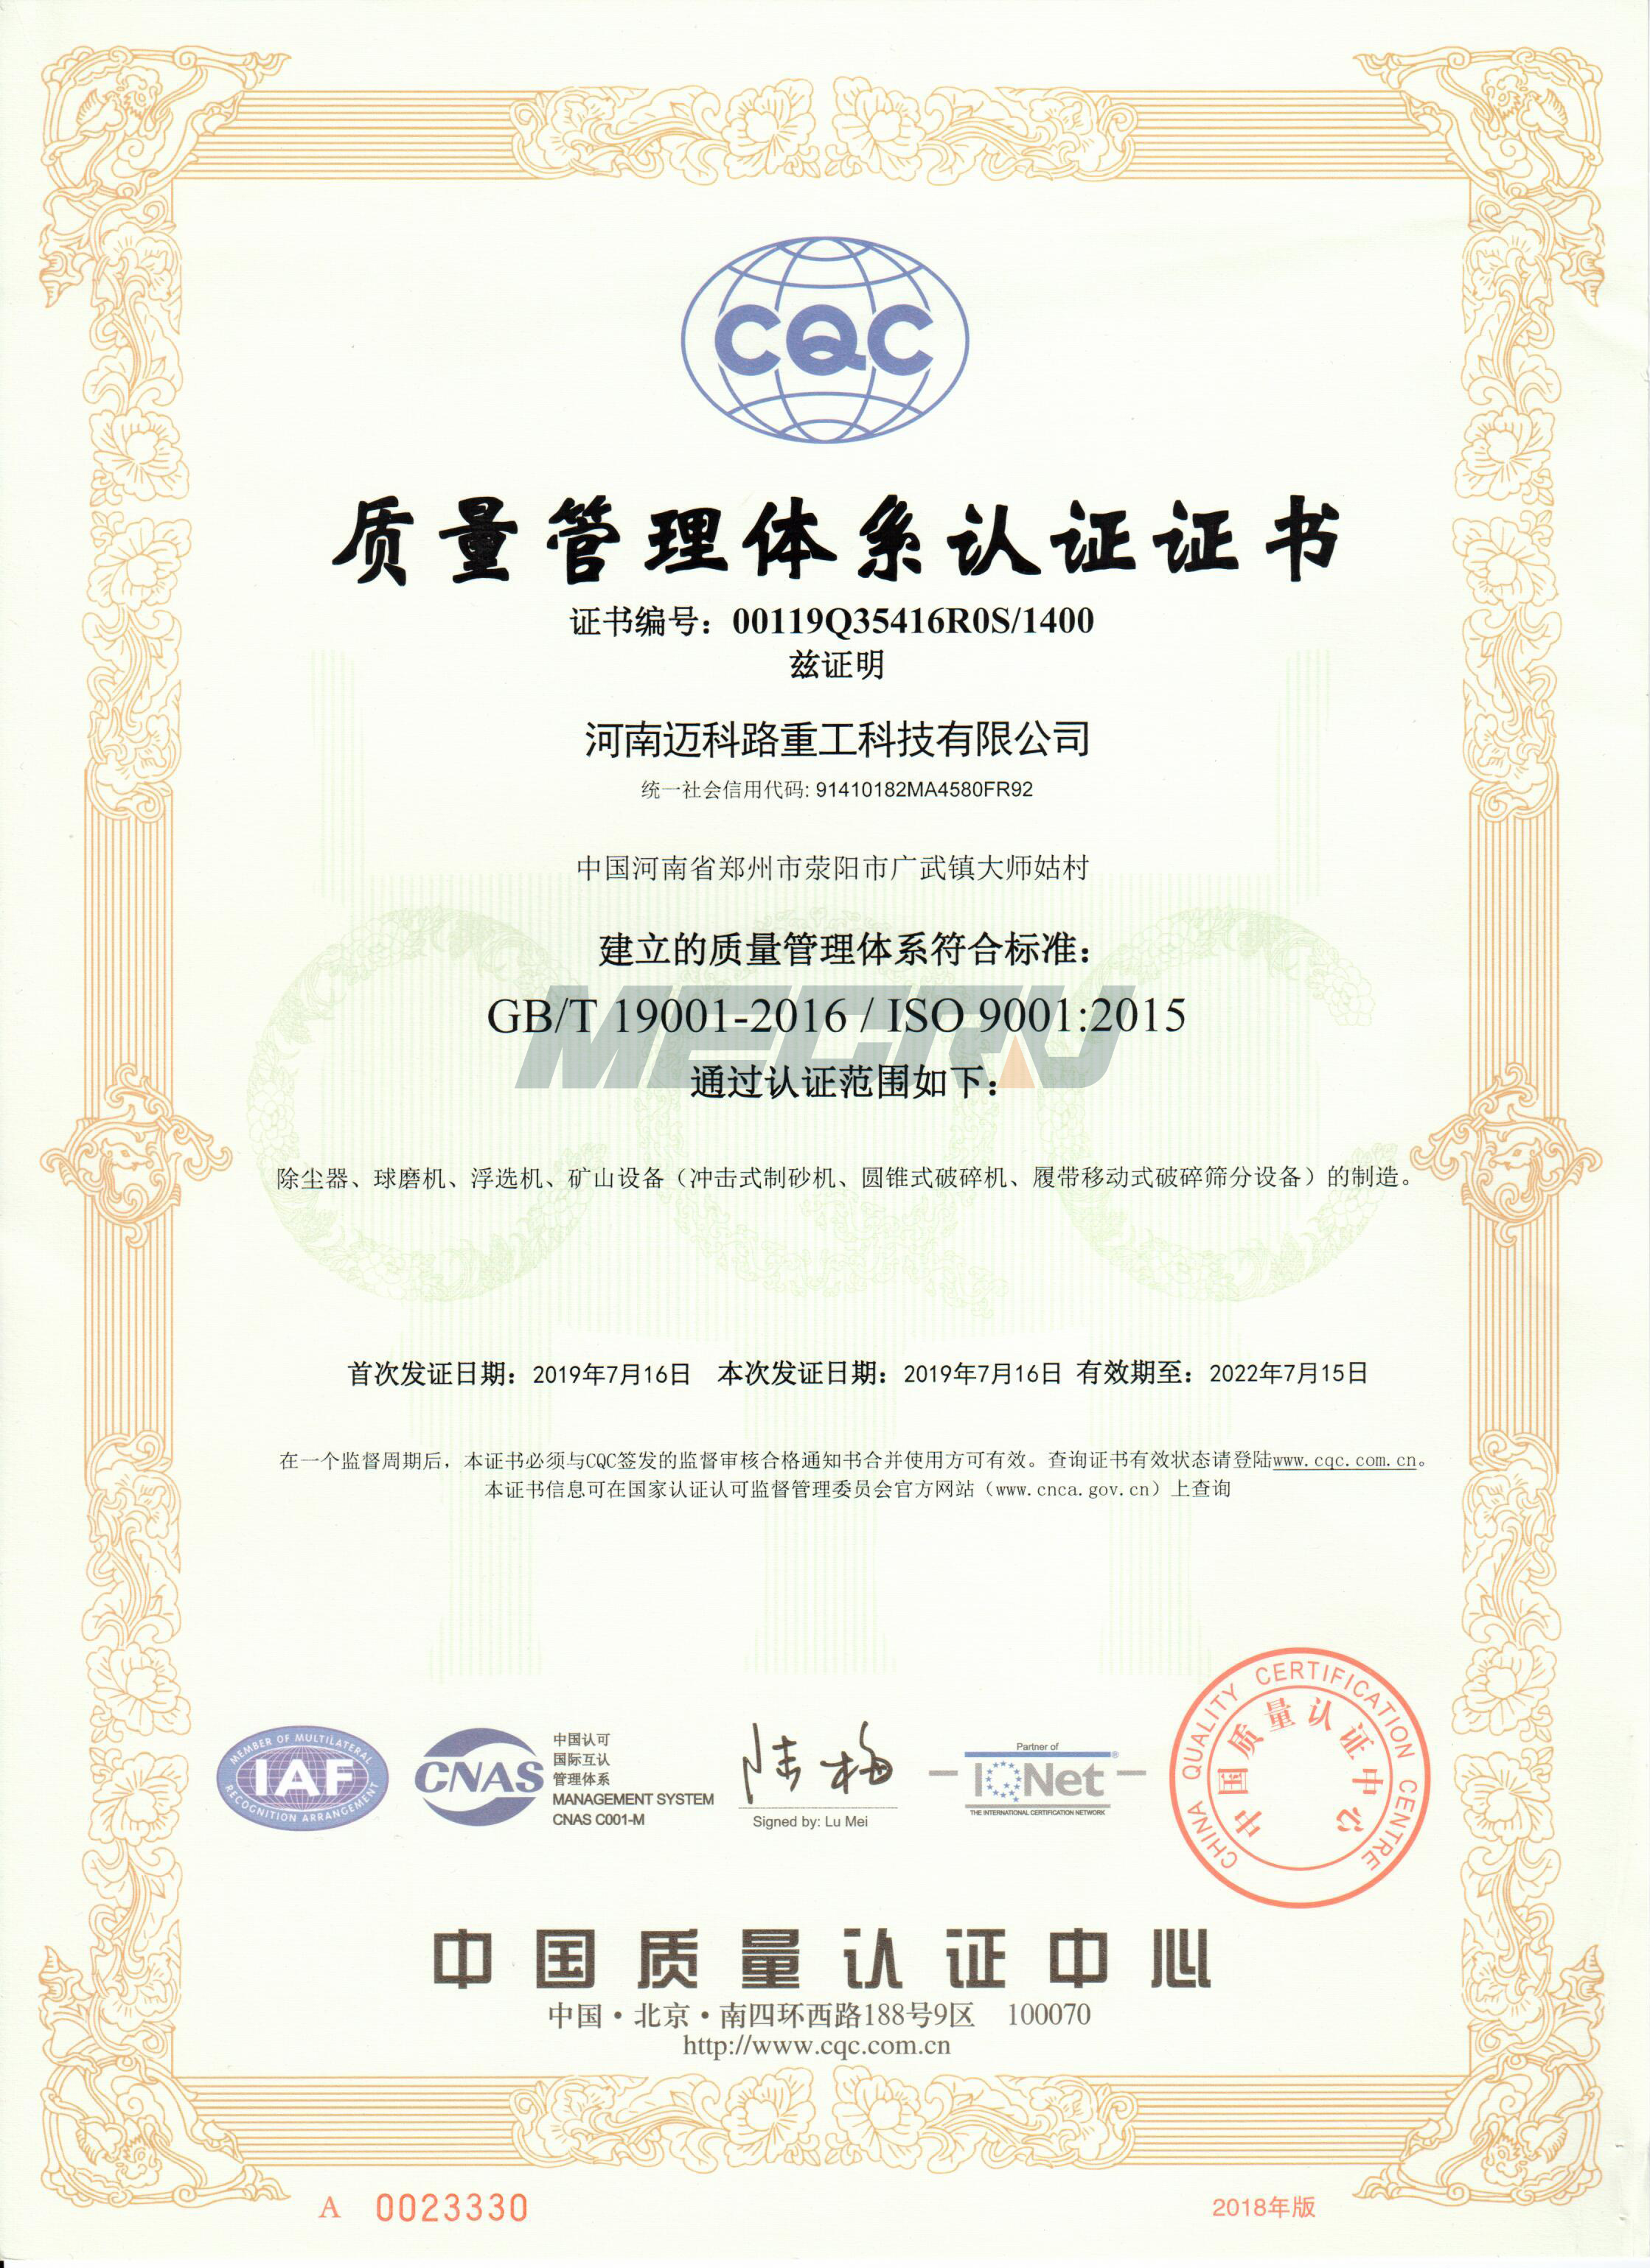 Сертификација система менаџмента квалитетом